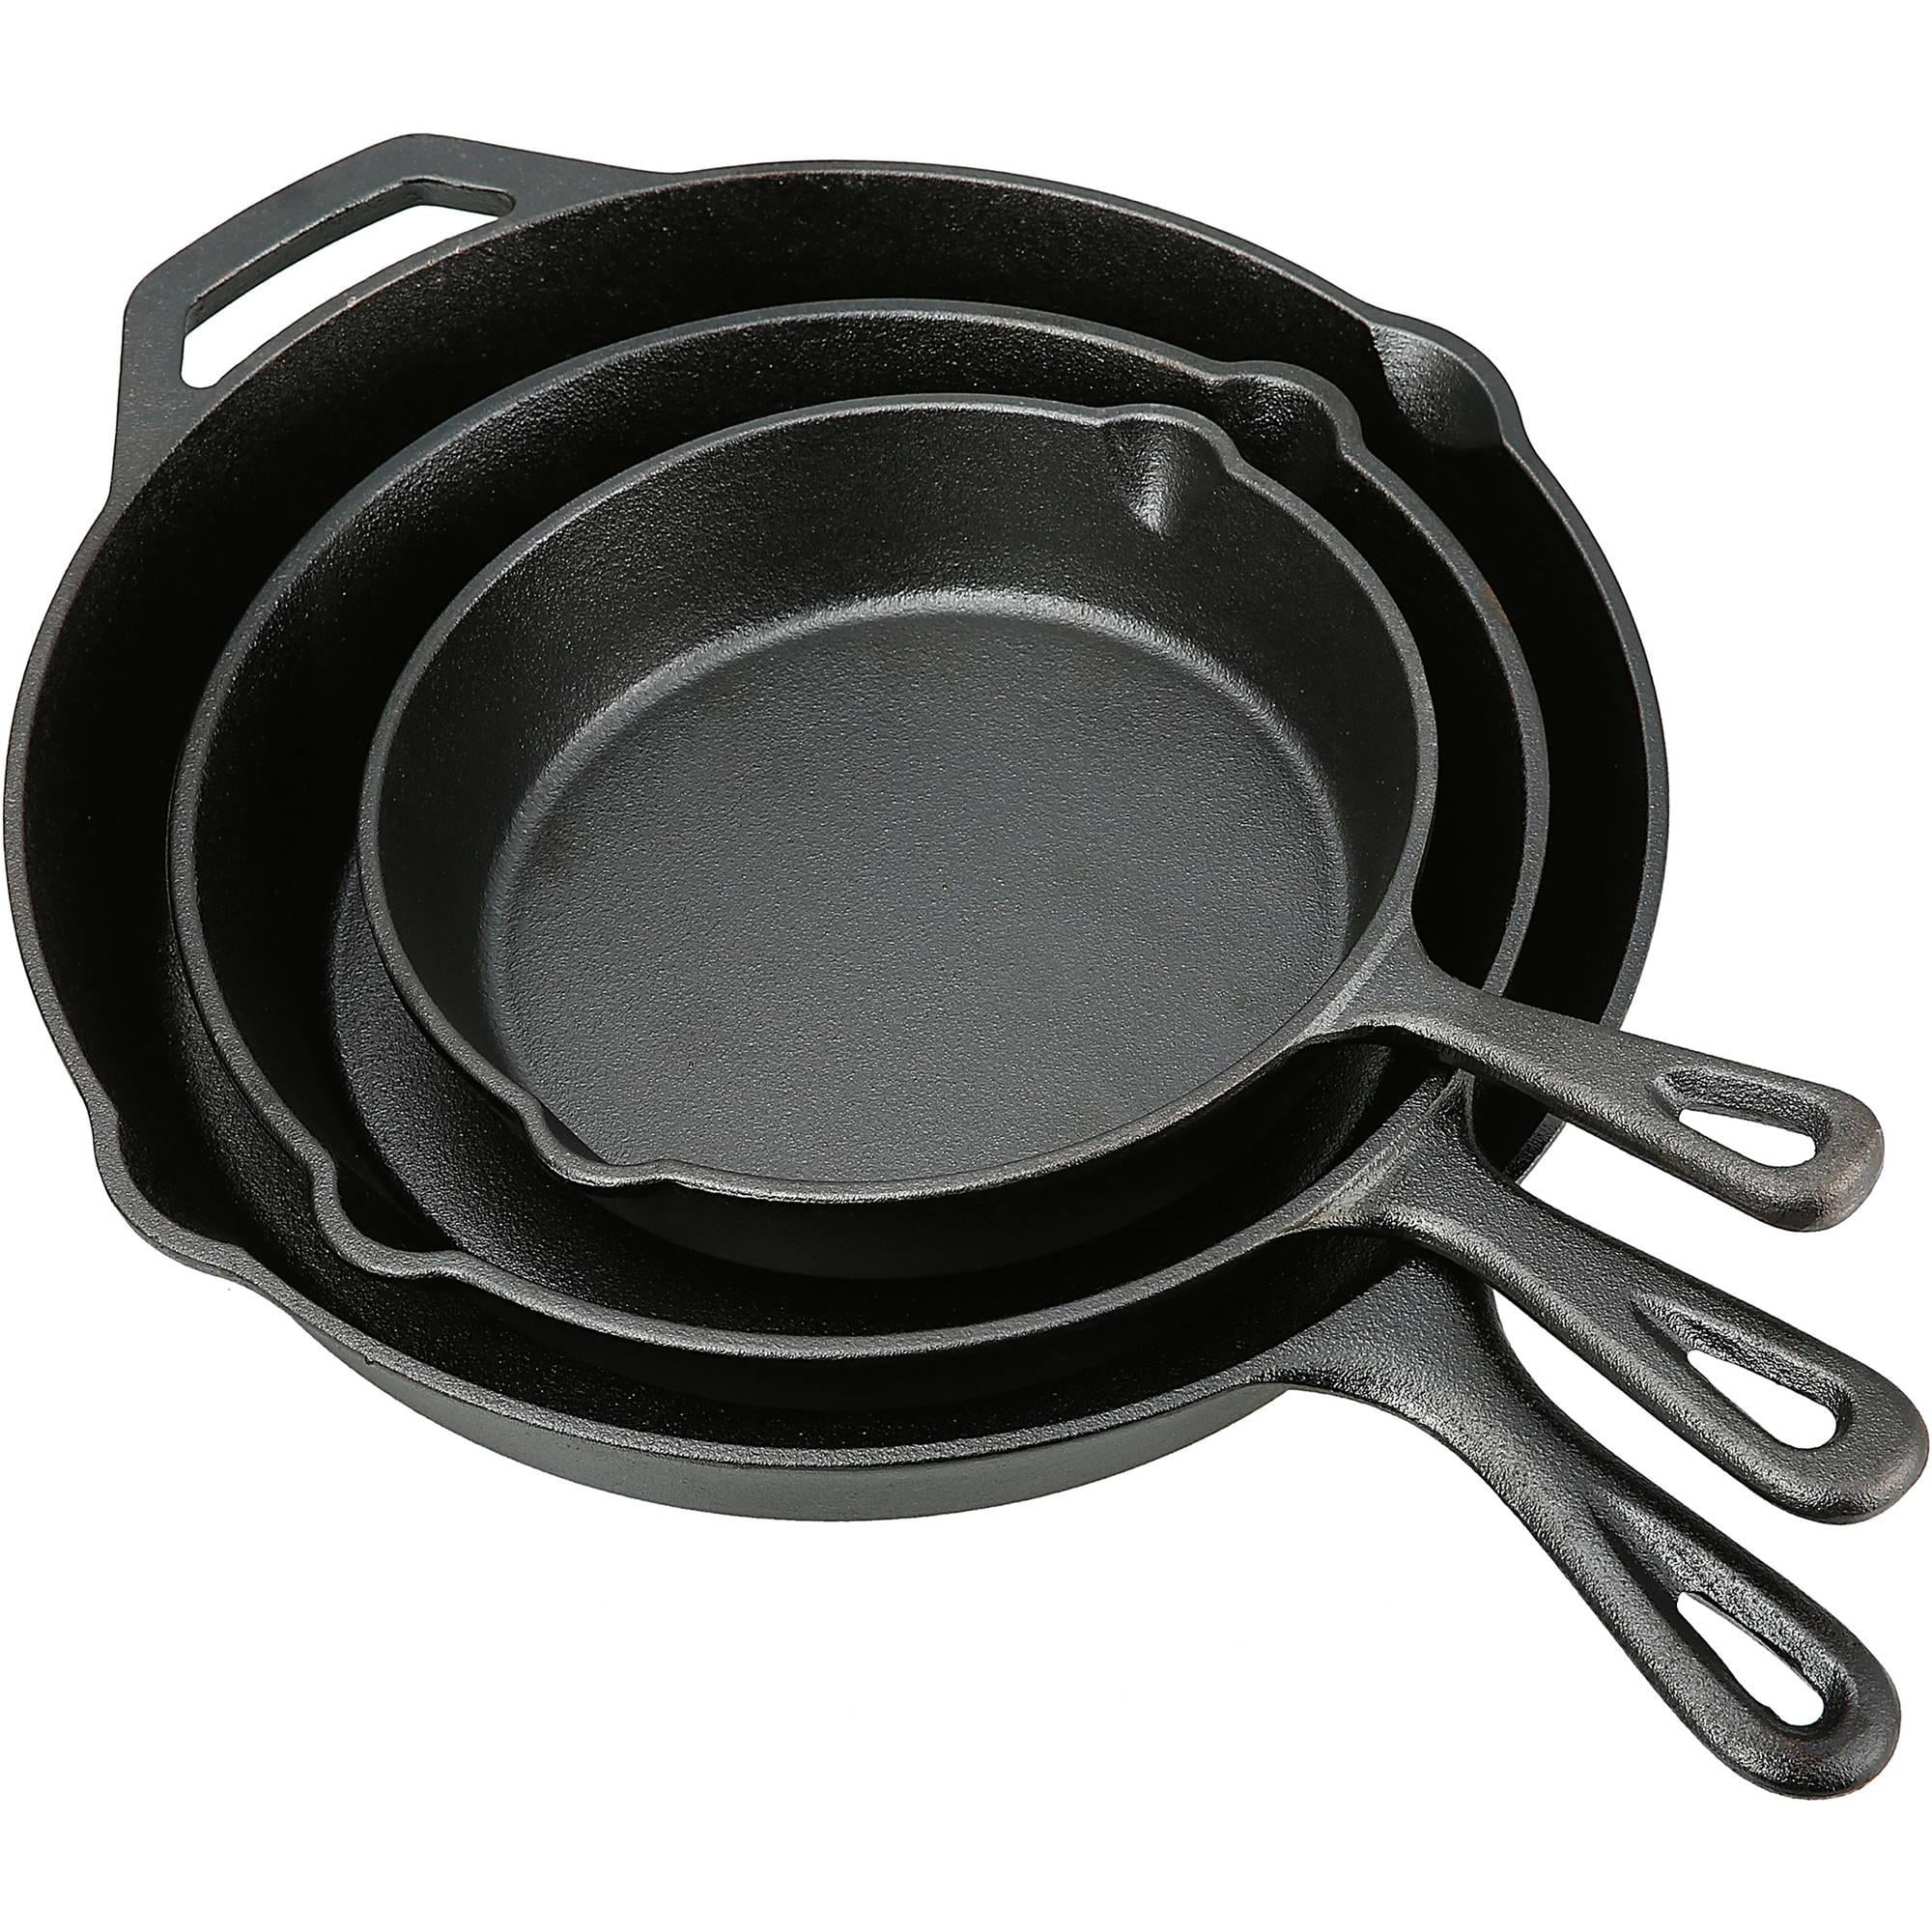 3 Piece Pan Set Black Oven Safe Cast Iron Frying cooking set non stick 2 year wa 